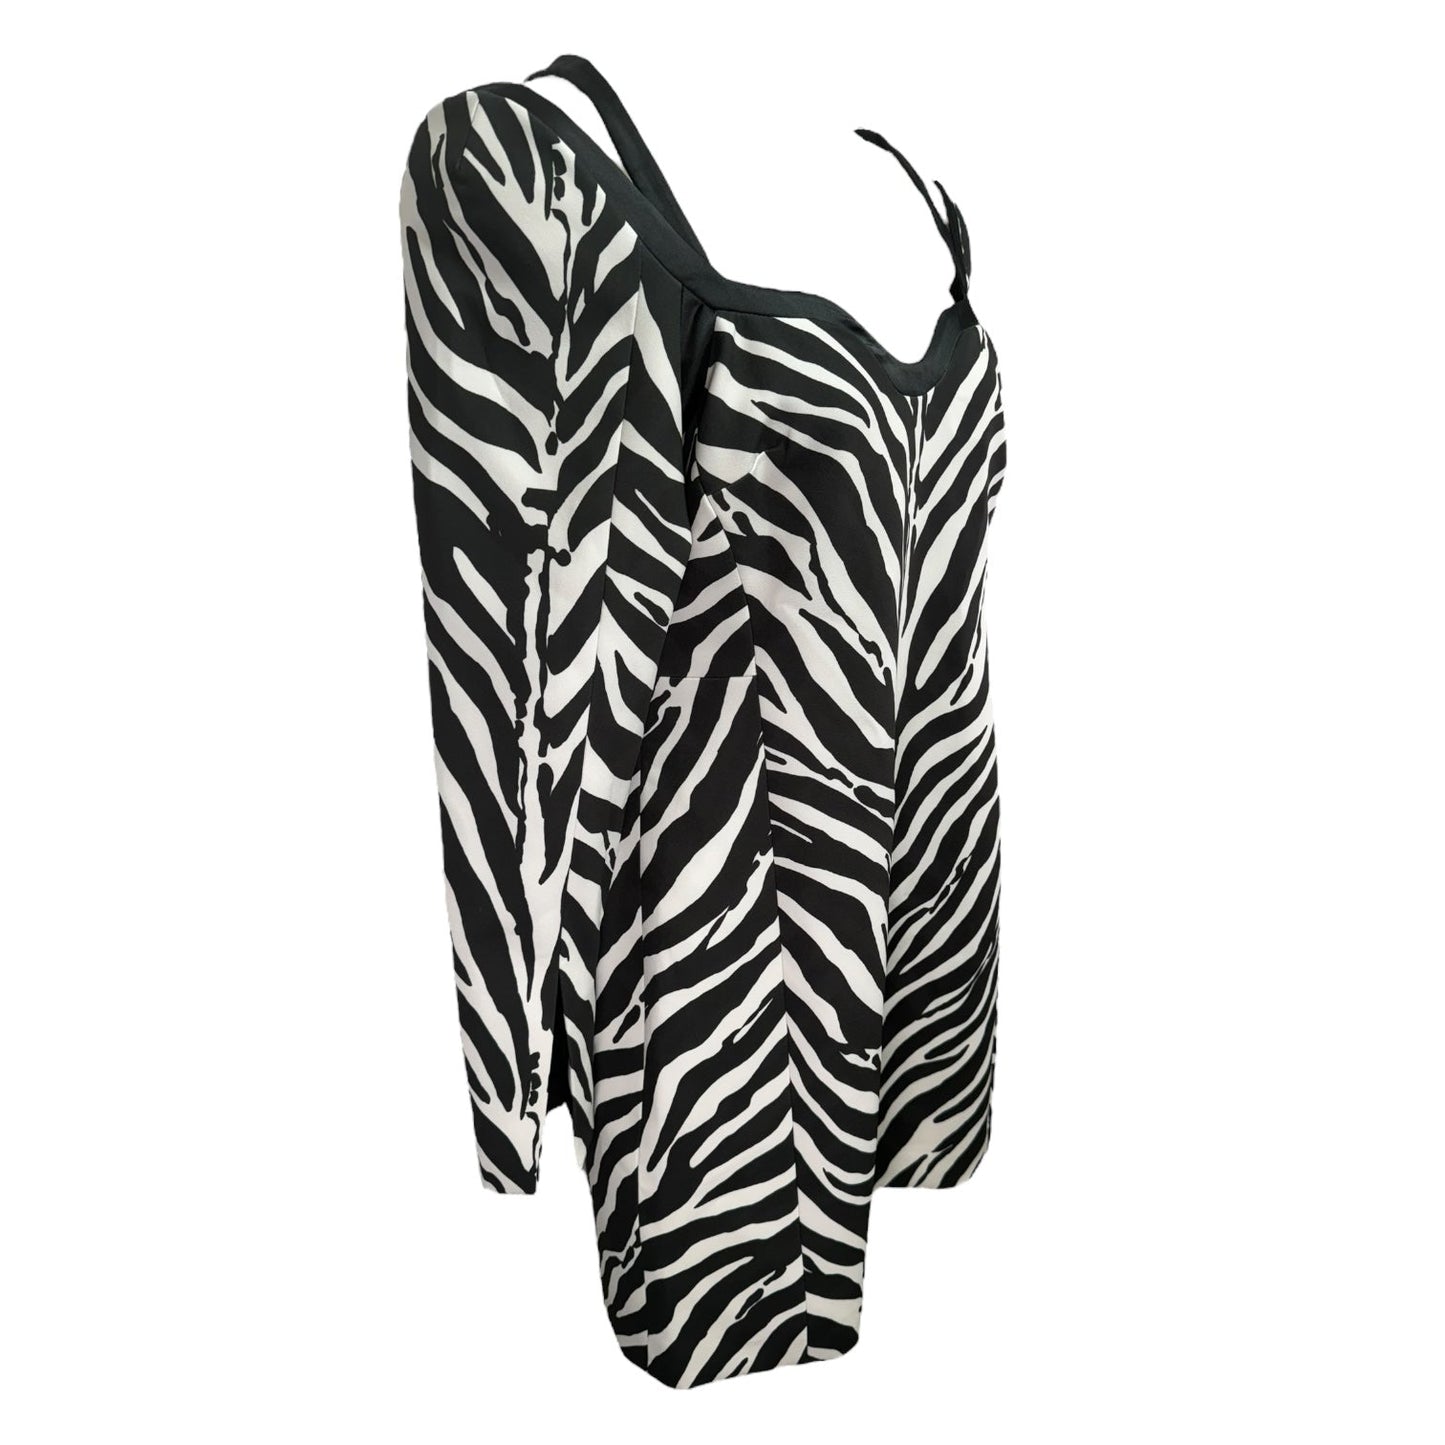 Zebra Printed Sleeved Mini Dress
Designer Karen Millen, Size 12